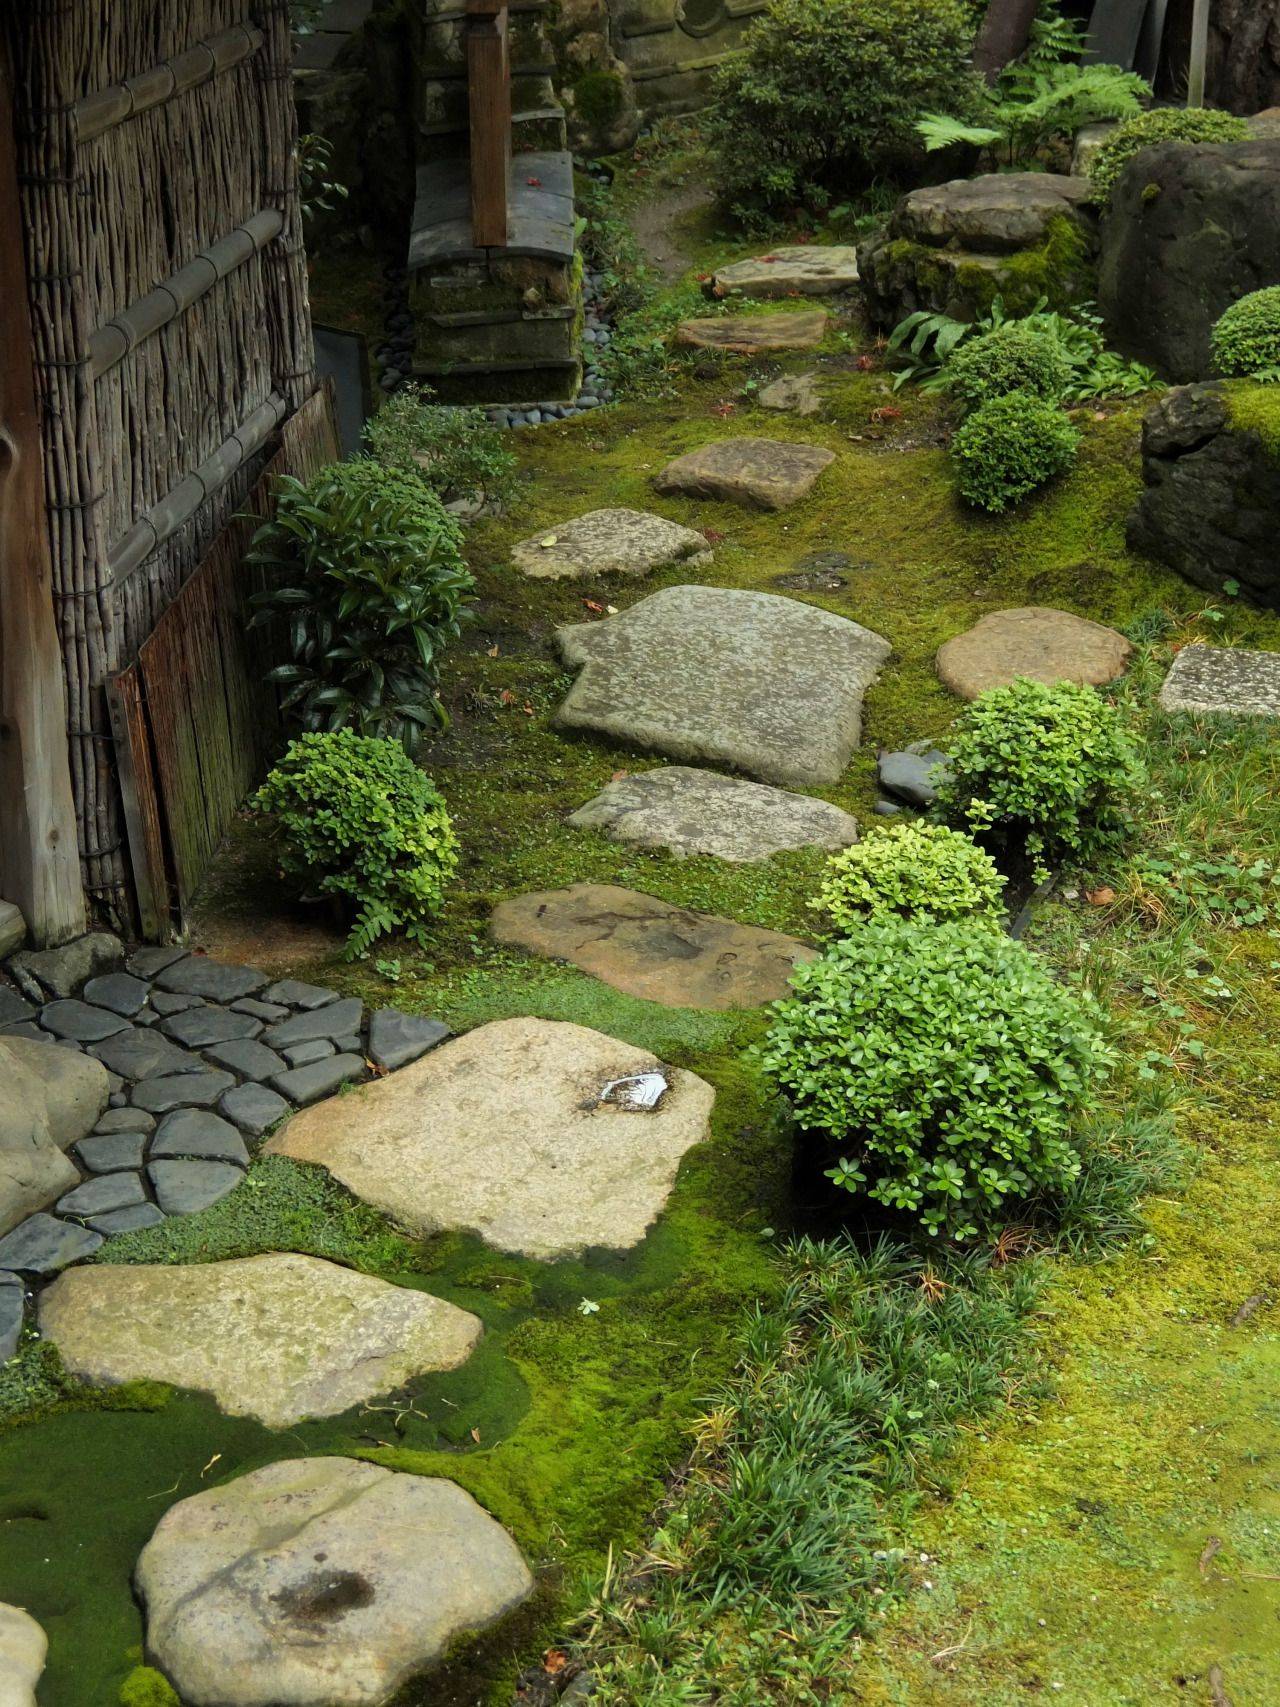 Stunning Japanese Zen Gardens Landscape